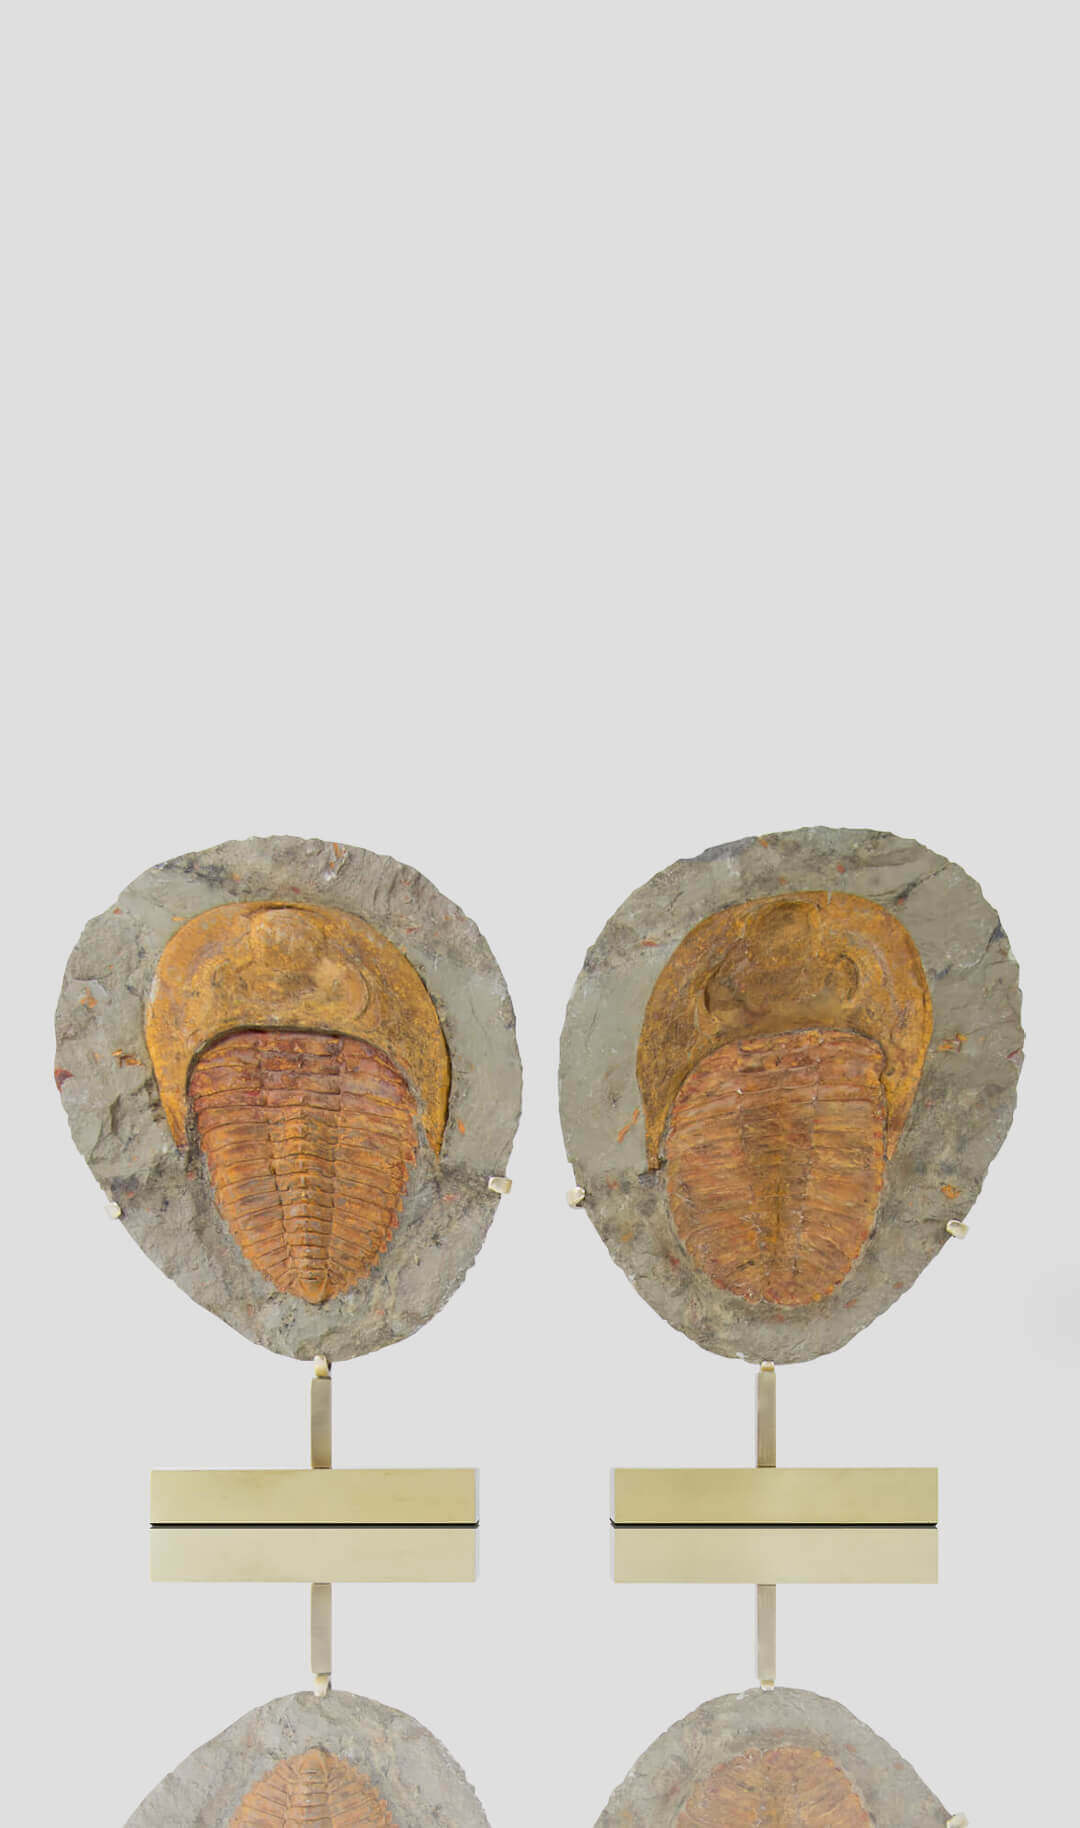 Fossil cambropallas trilobite for sale on a bronze stand 376